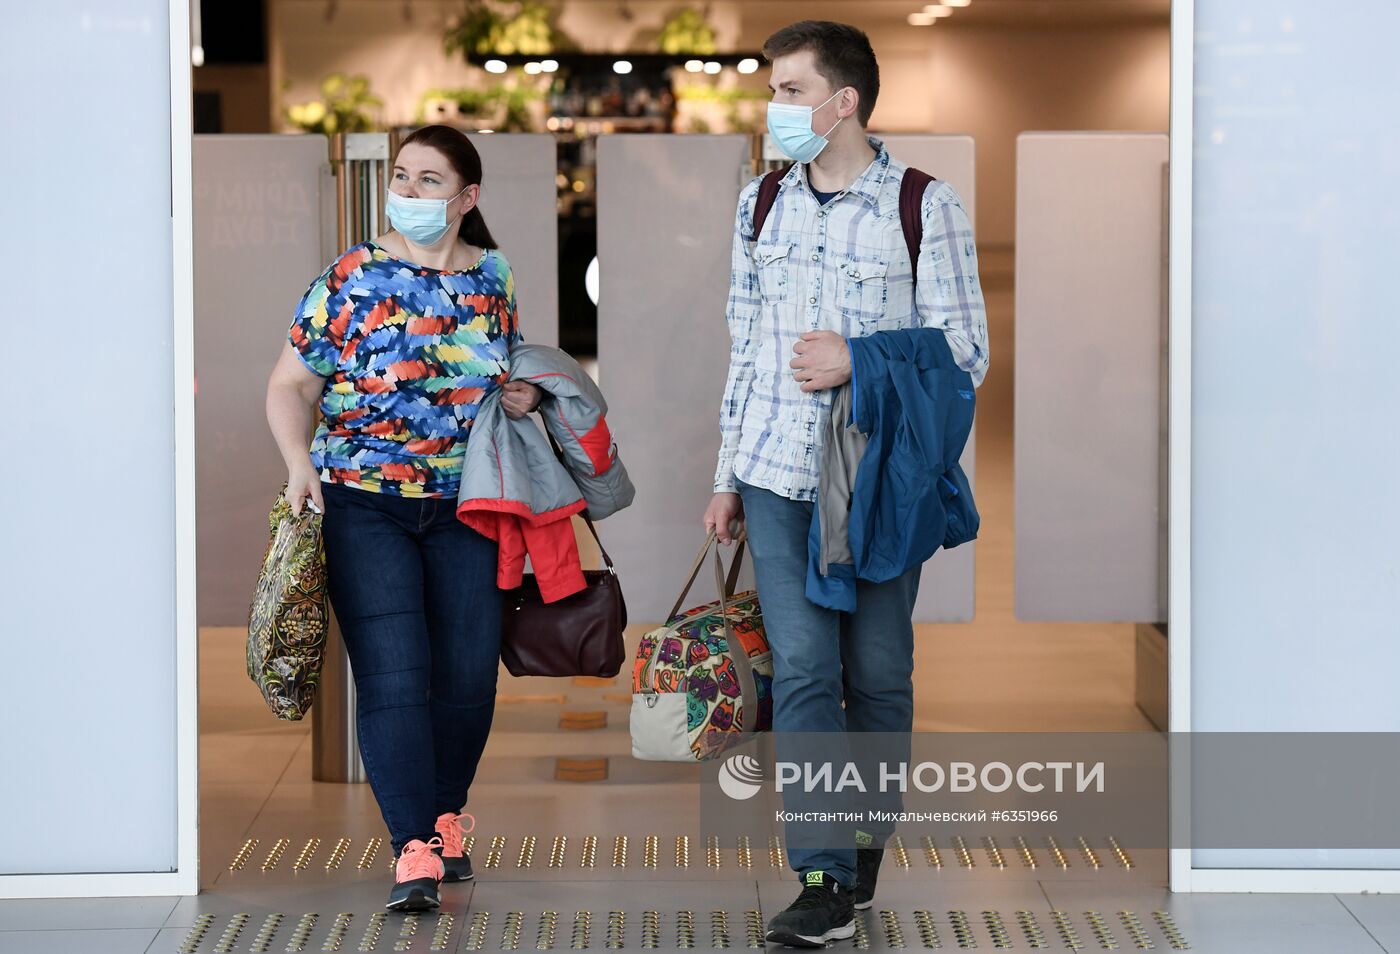 Ситуация в связи с коронавирусом в аэропорту Симферополя